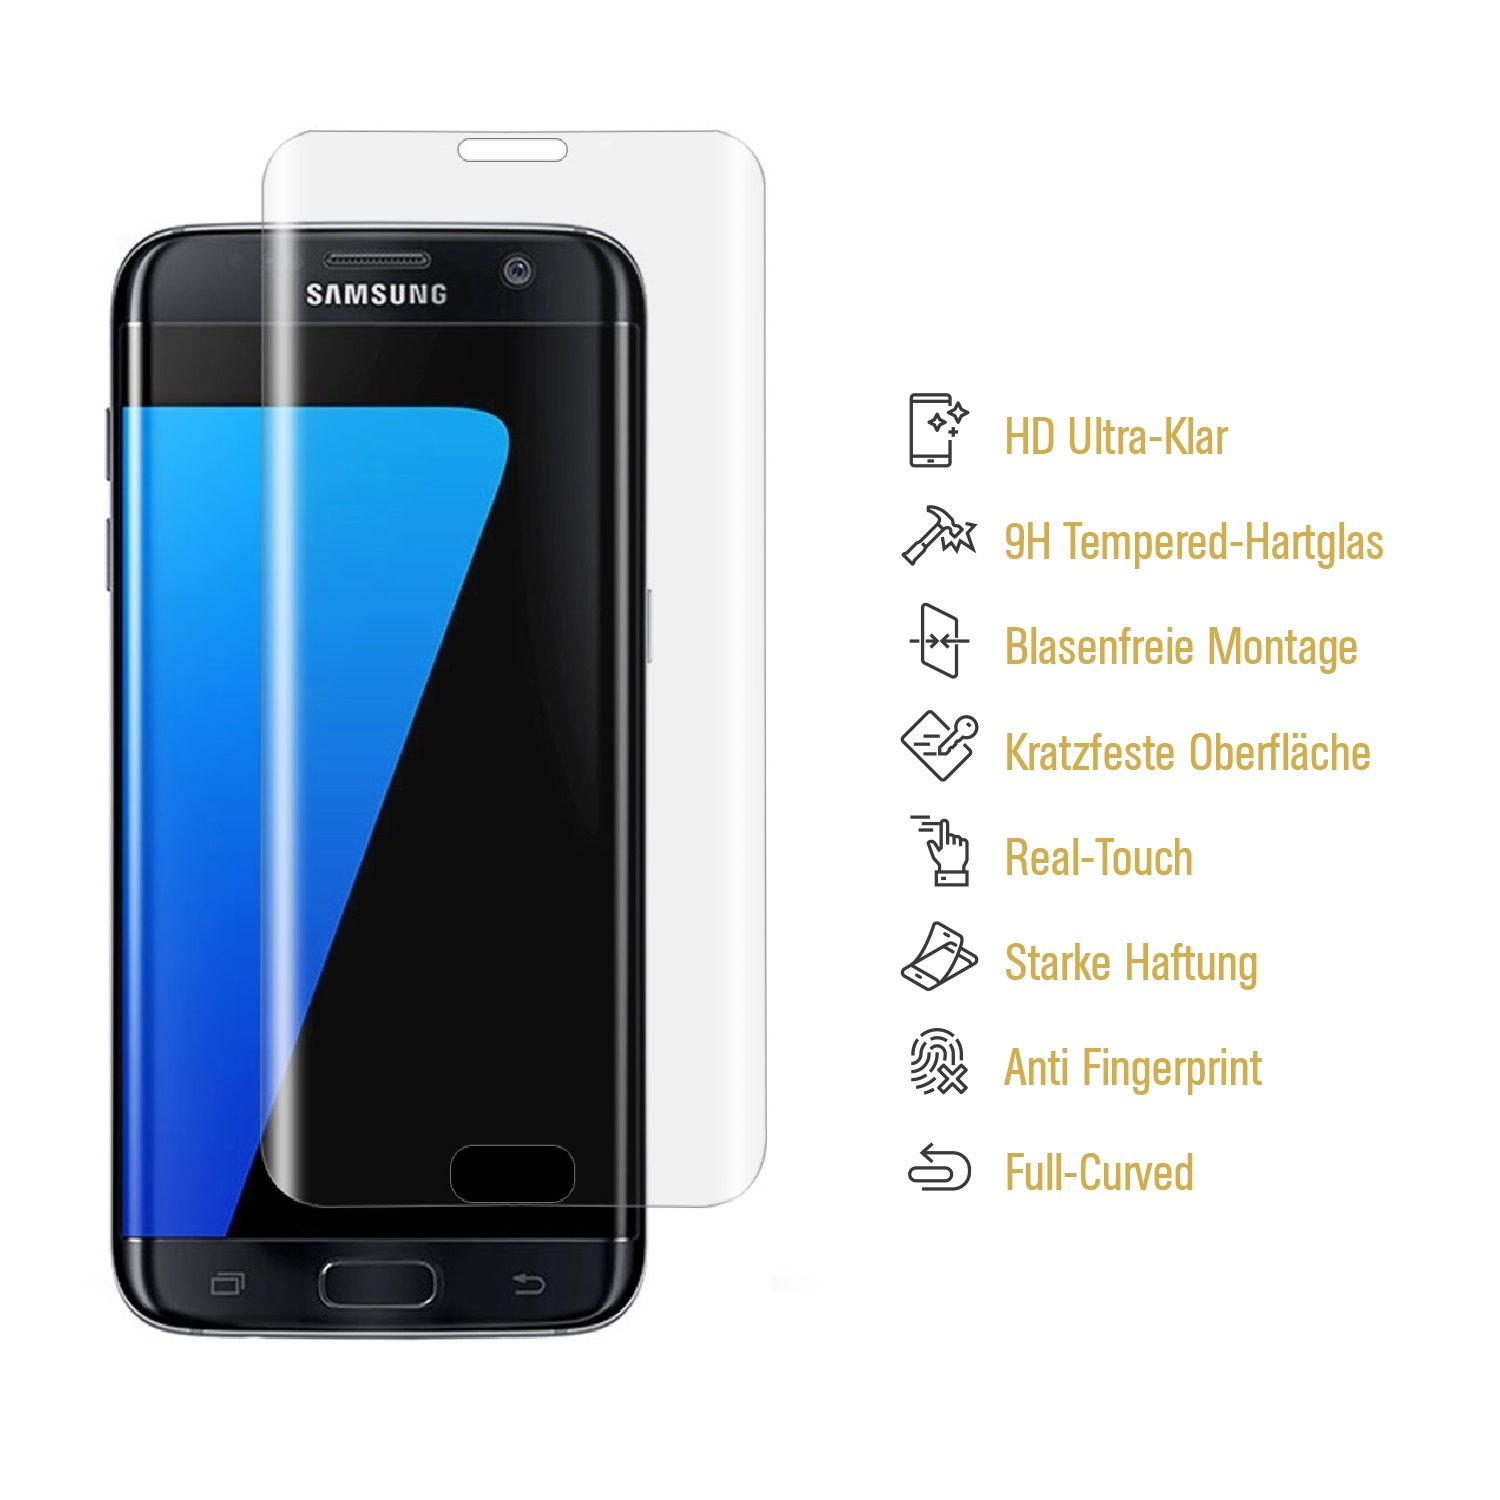 S7) PROTECTORKING 2x Hartglas Displayschutzfolie(für HD-Klar 9H Samsung Galaxy FULL CURVED